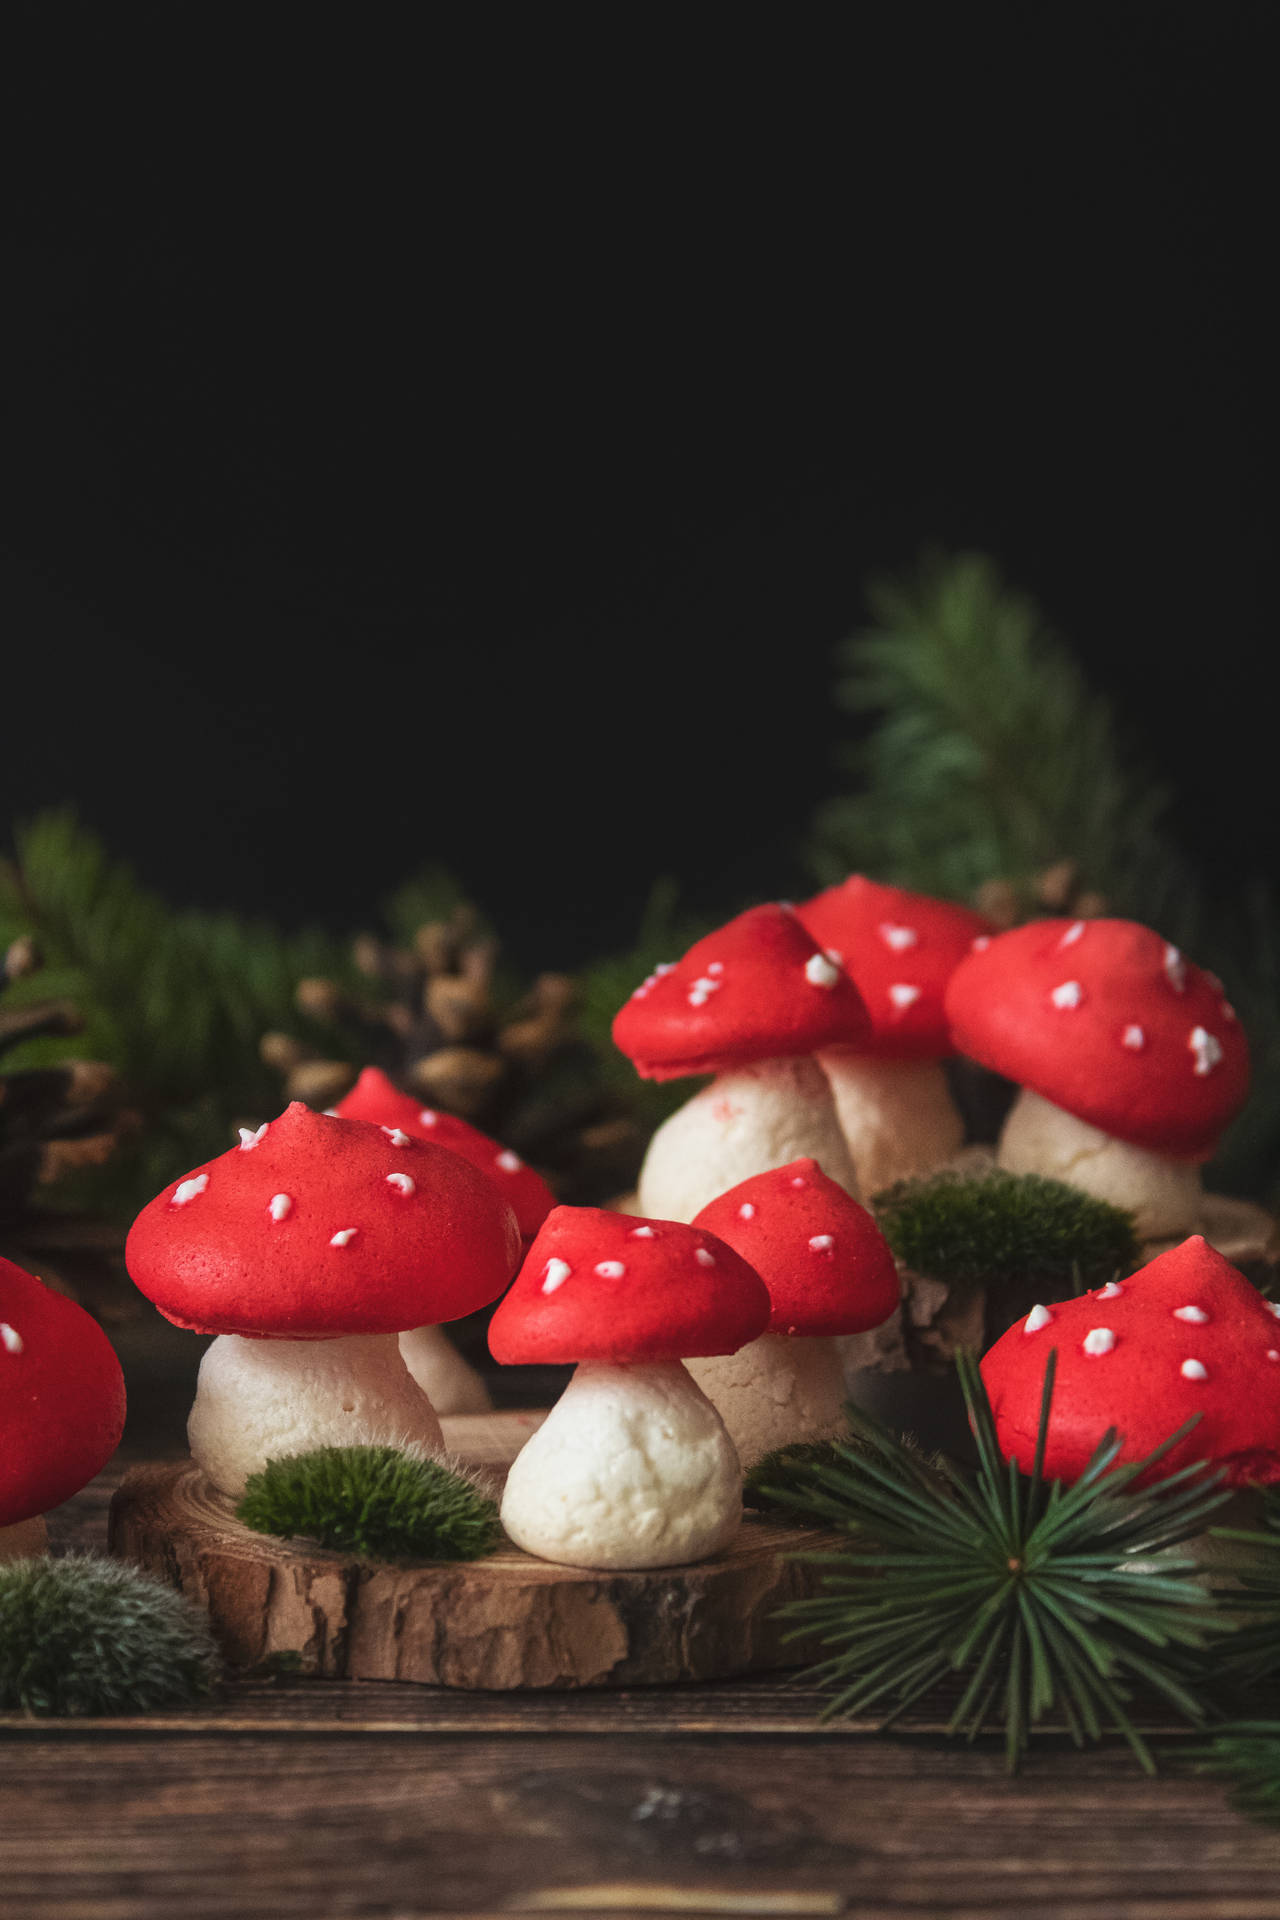 Meringue Based On Cute Mushrooms Background